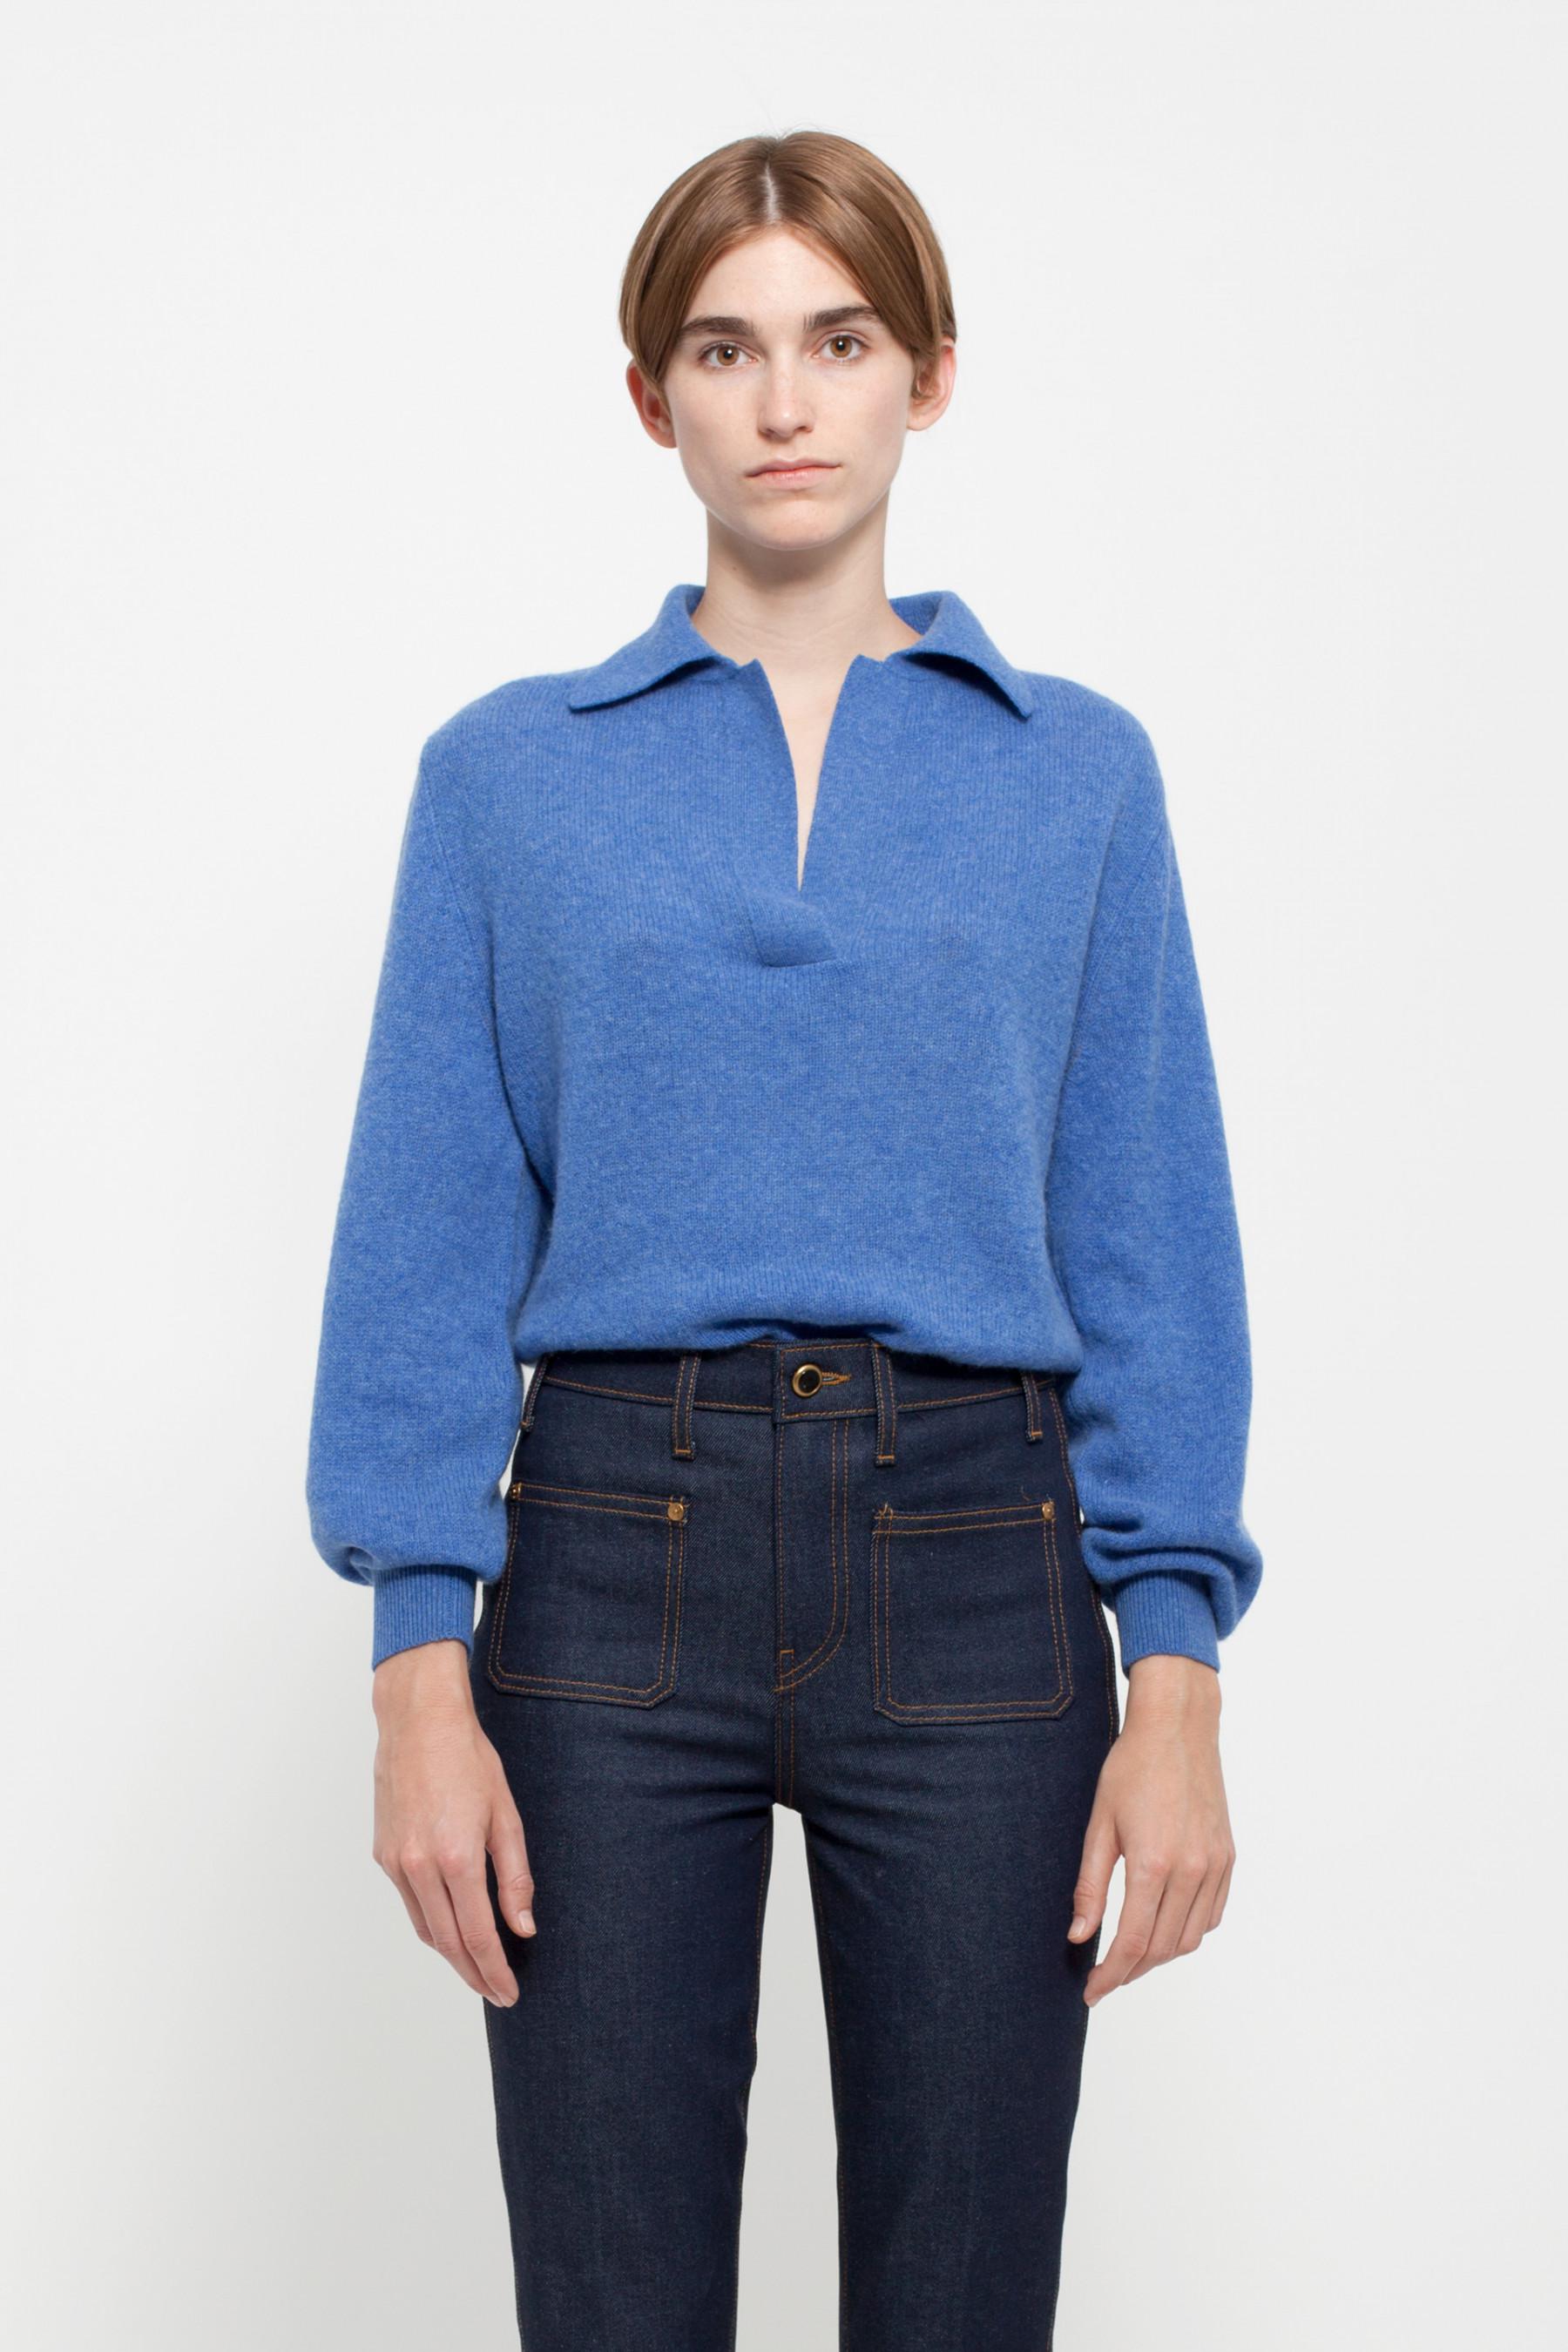 Khaite Cashmere Jo Sweater in Blue - Lyst